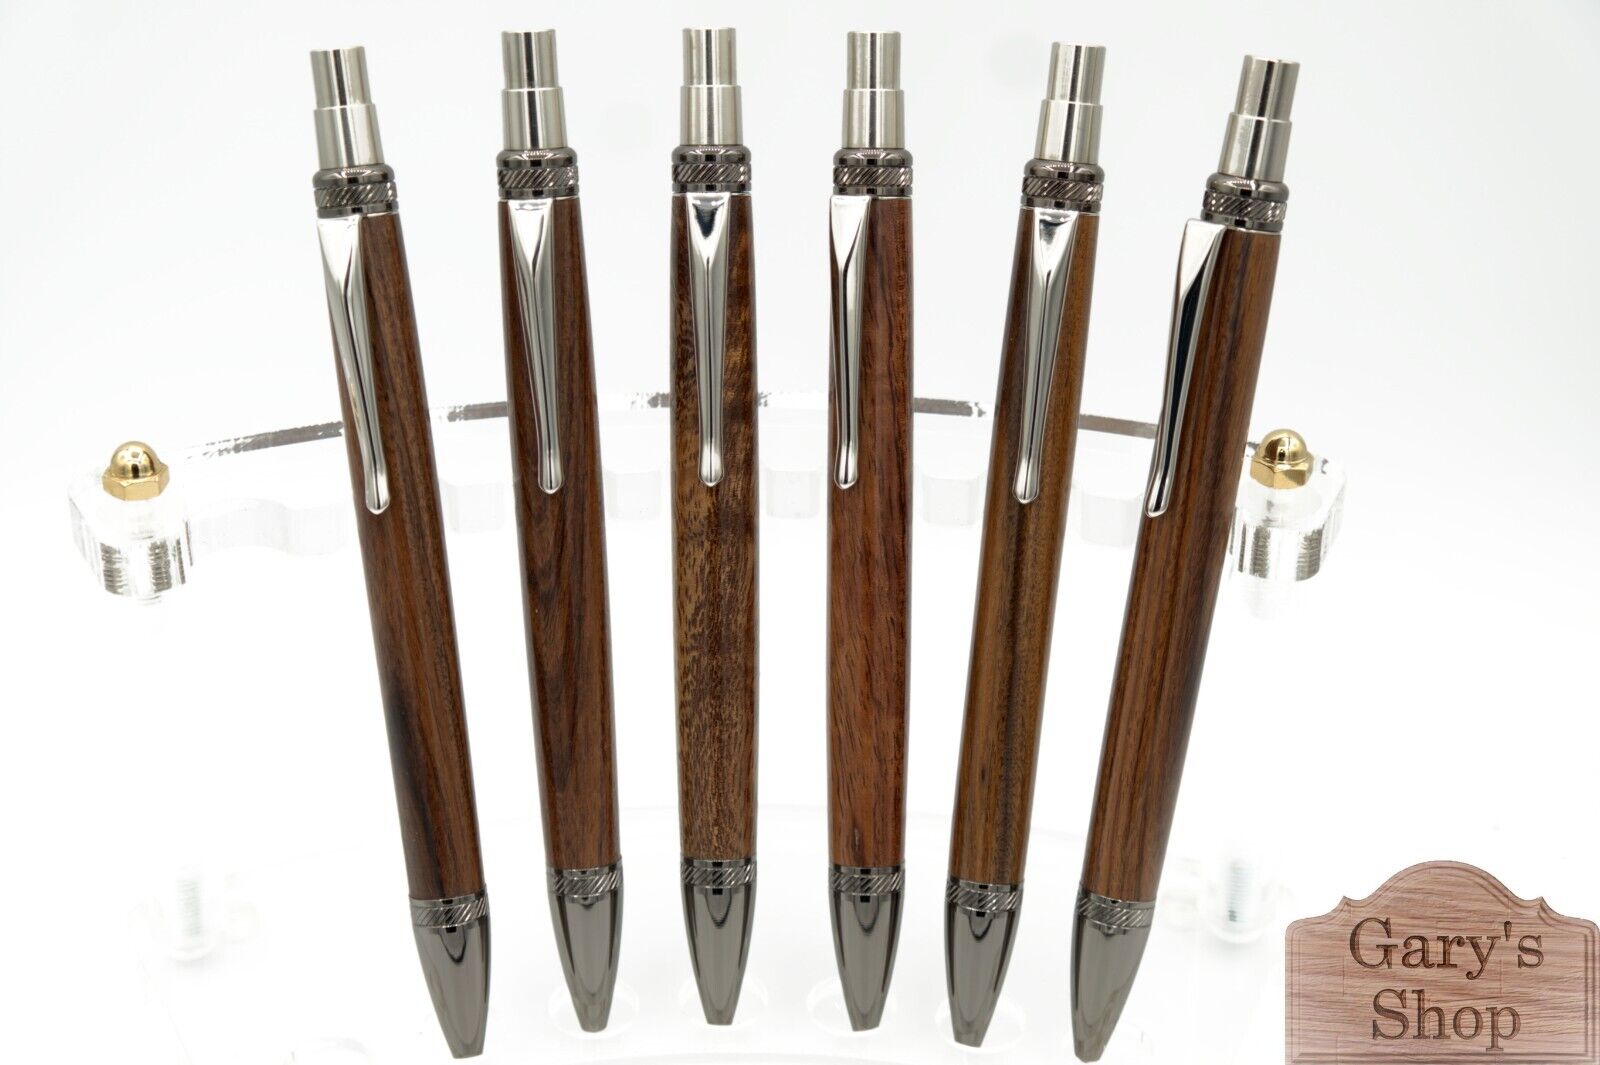 Bolivian Rosewood Pen with Blade Button Click Ballpoint Pen in Gunmetal Nickel